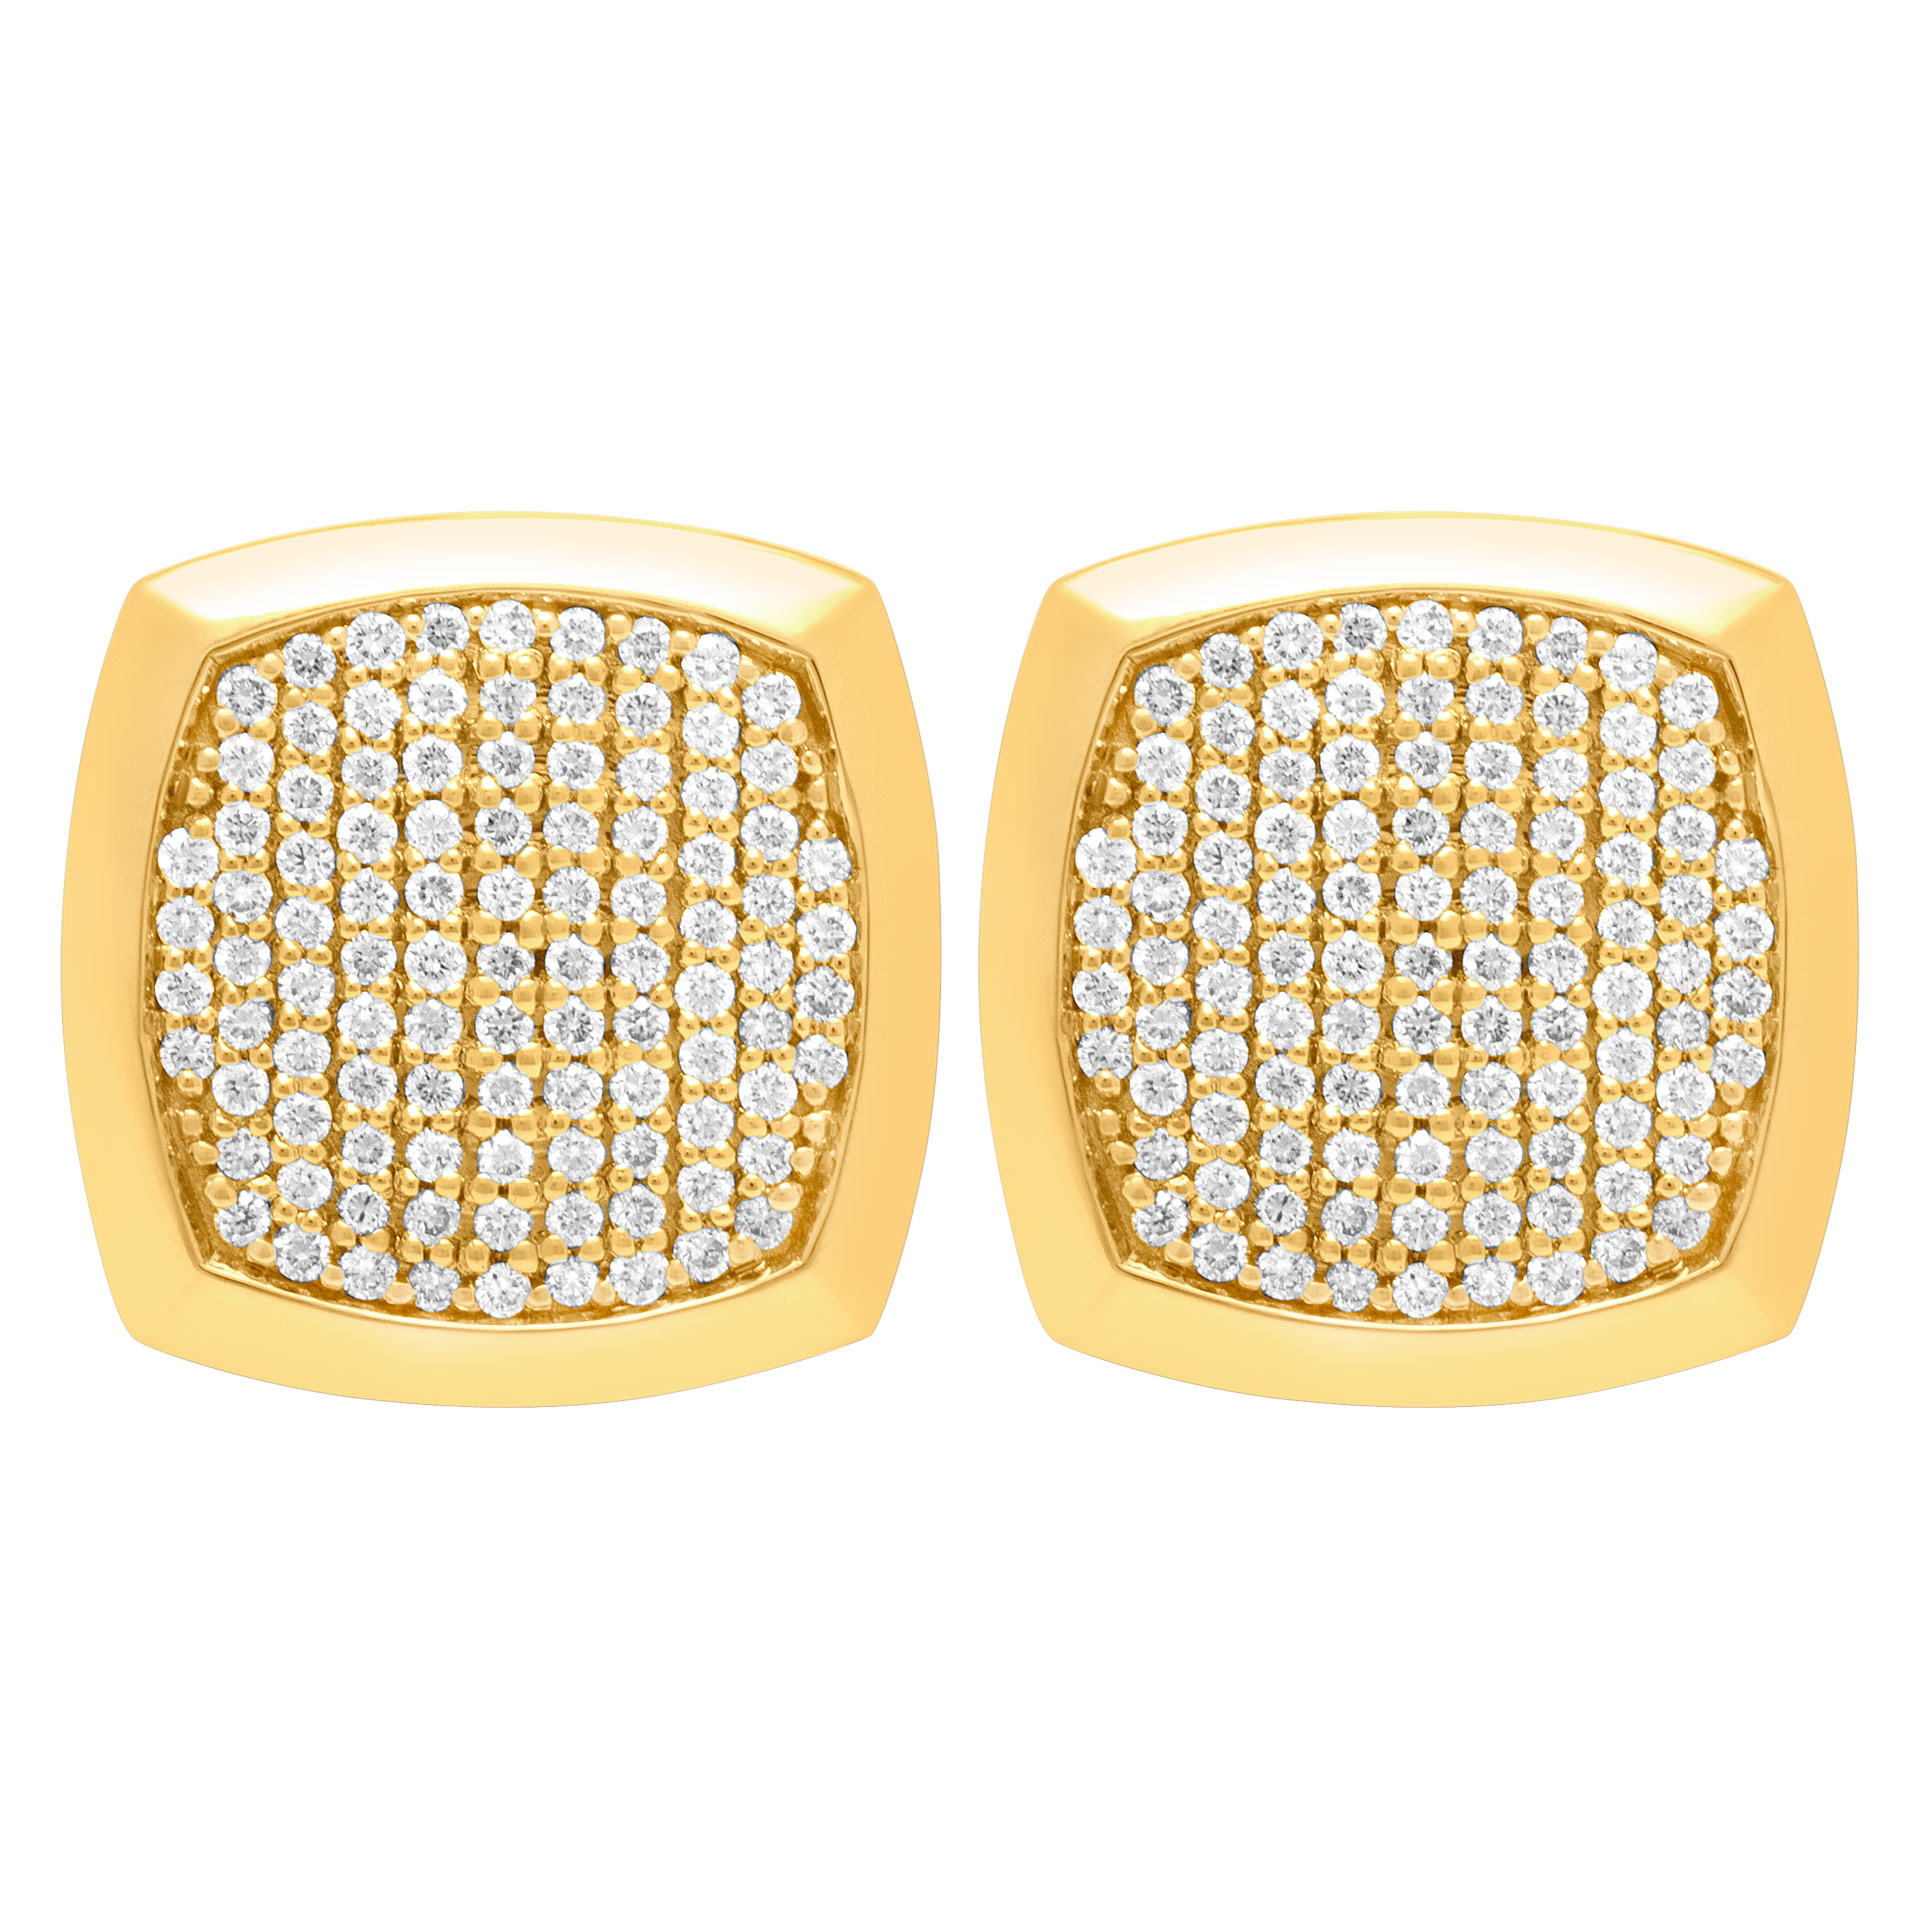 Cushion shape diamond cufflinks in 18k gold. 1.48 carats in diamonds image 1